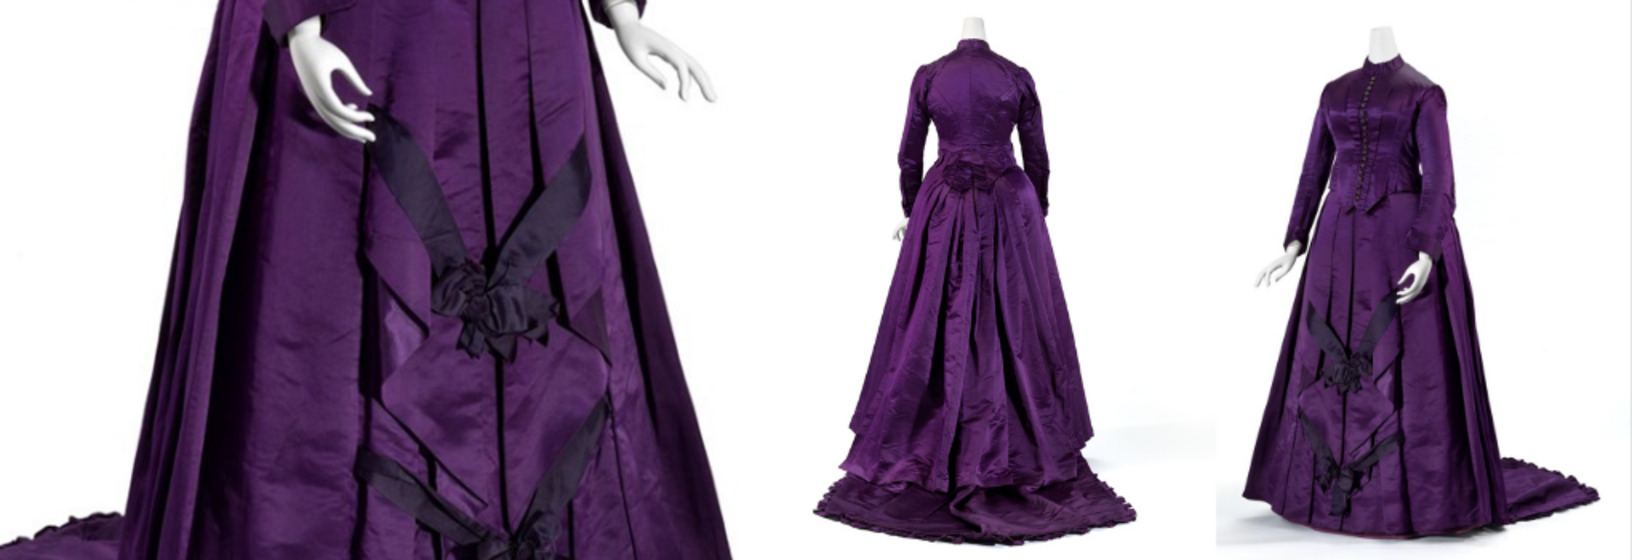 three views of a dark purple wedding dress on a mannequin